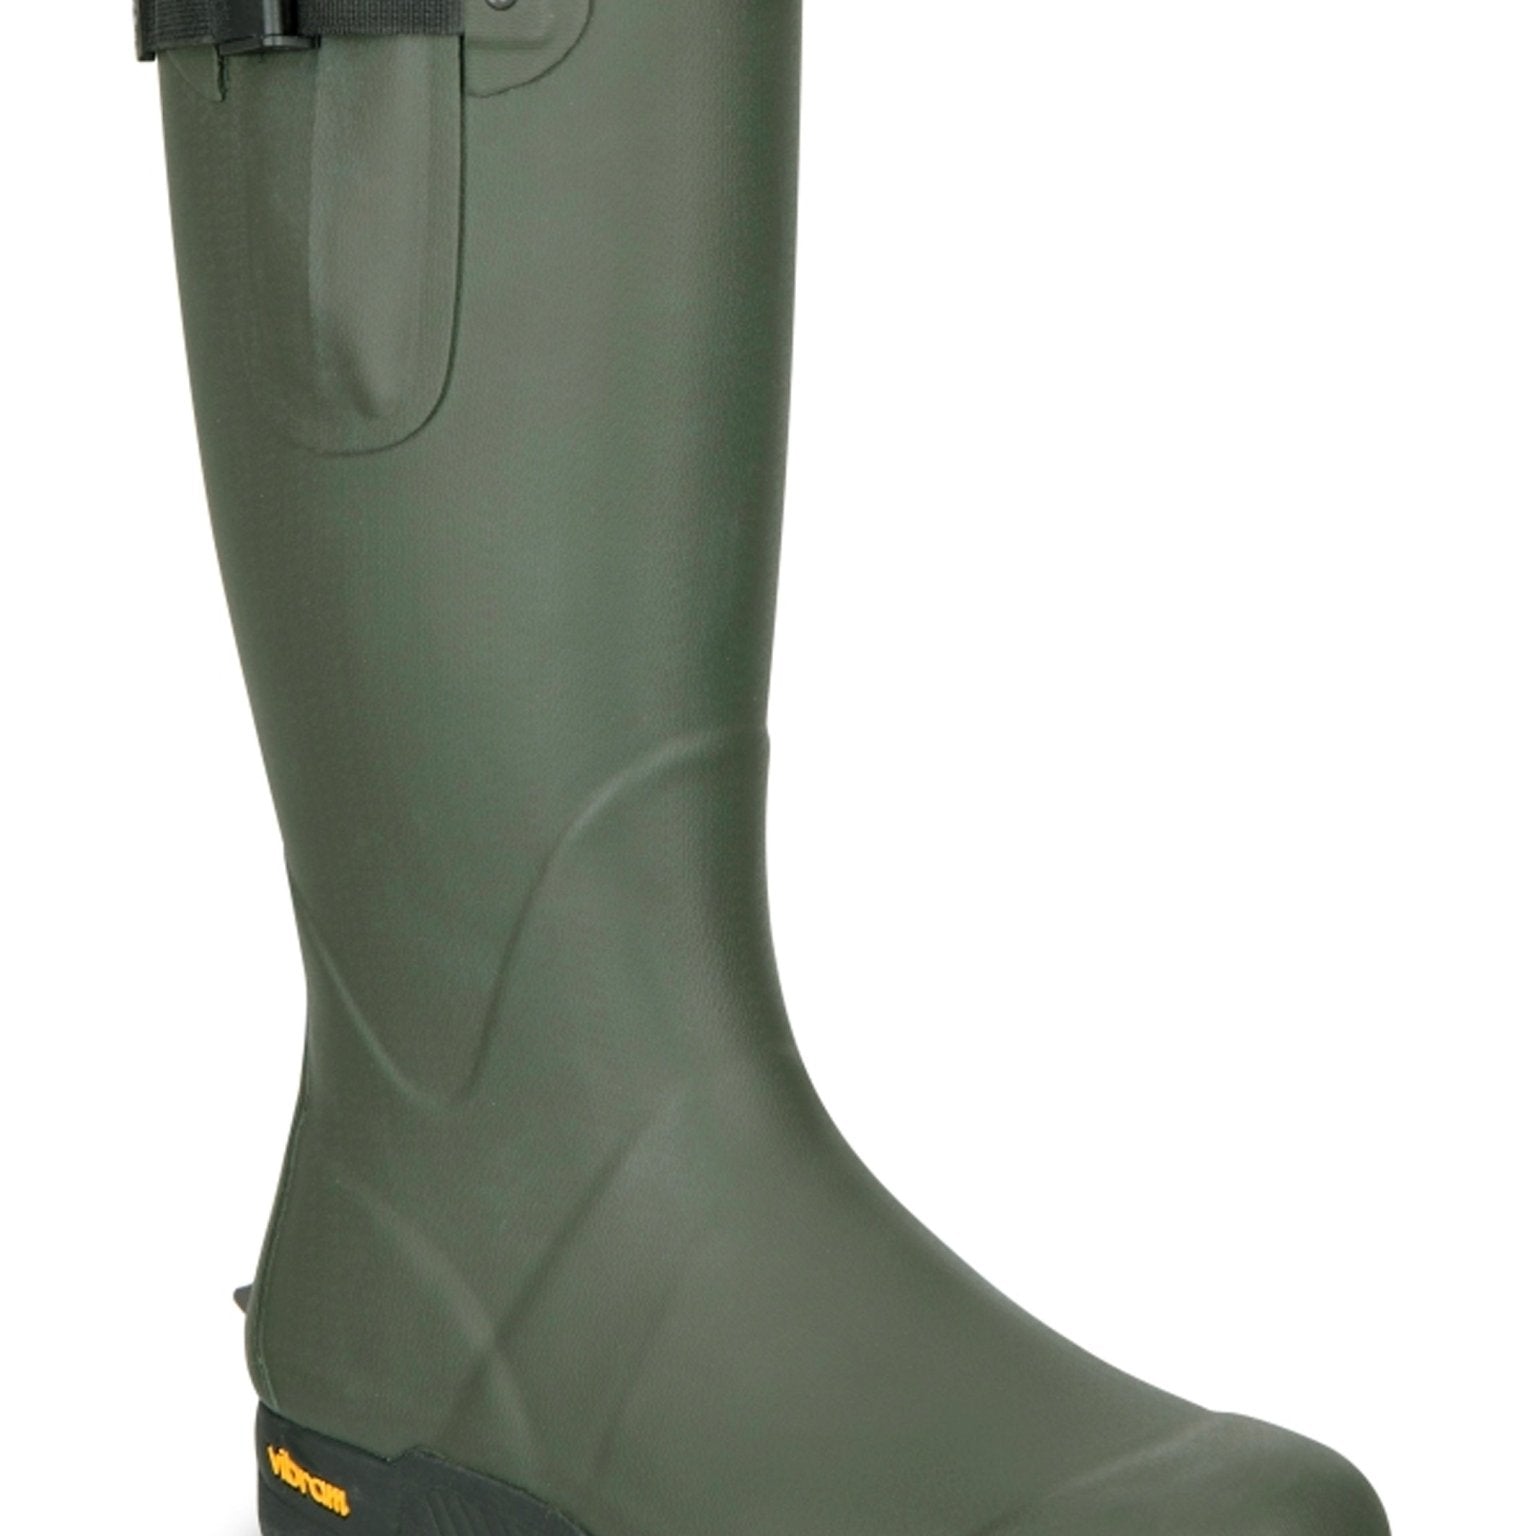 4elementsclothingHoggs of FifeHoggs Of Fife - Wellington boots Neoprene-lined / welly boot - Rubber boot Field SportsBootsFSPT/GR/040